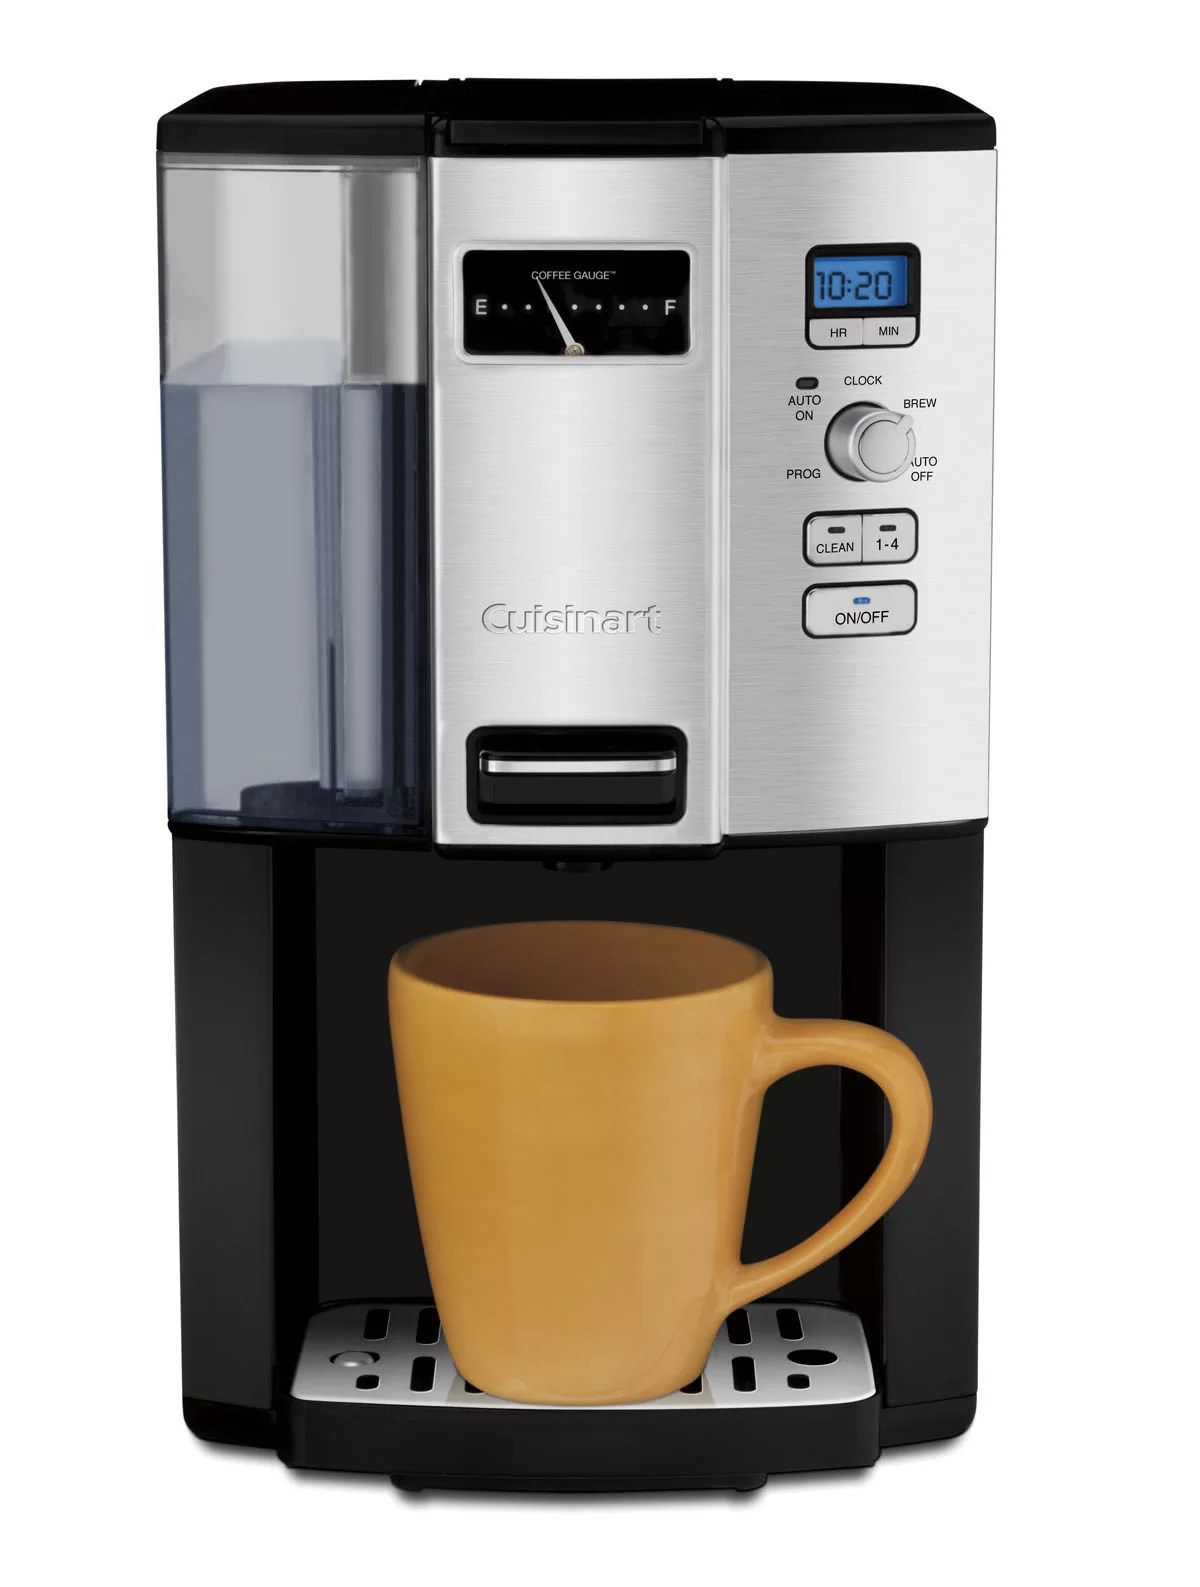 The programmable coffeemaker